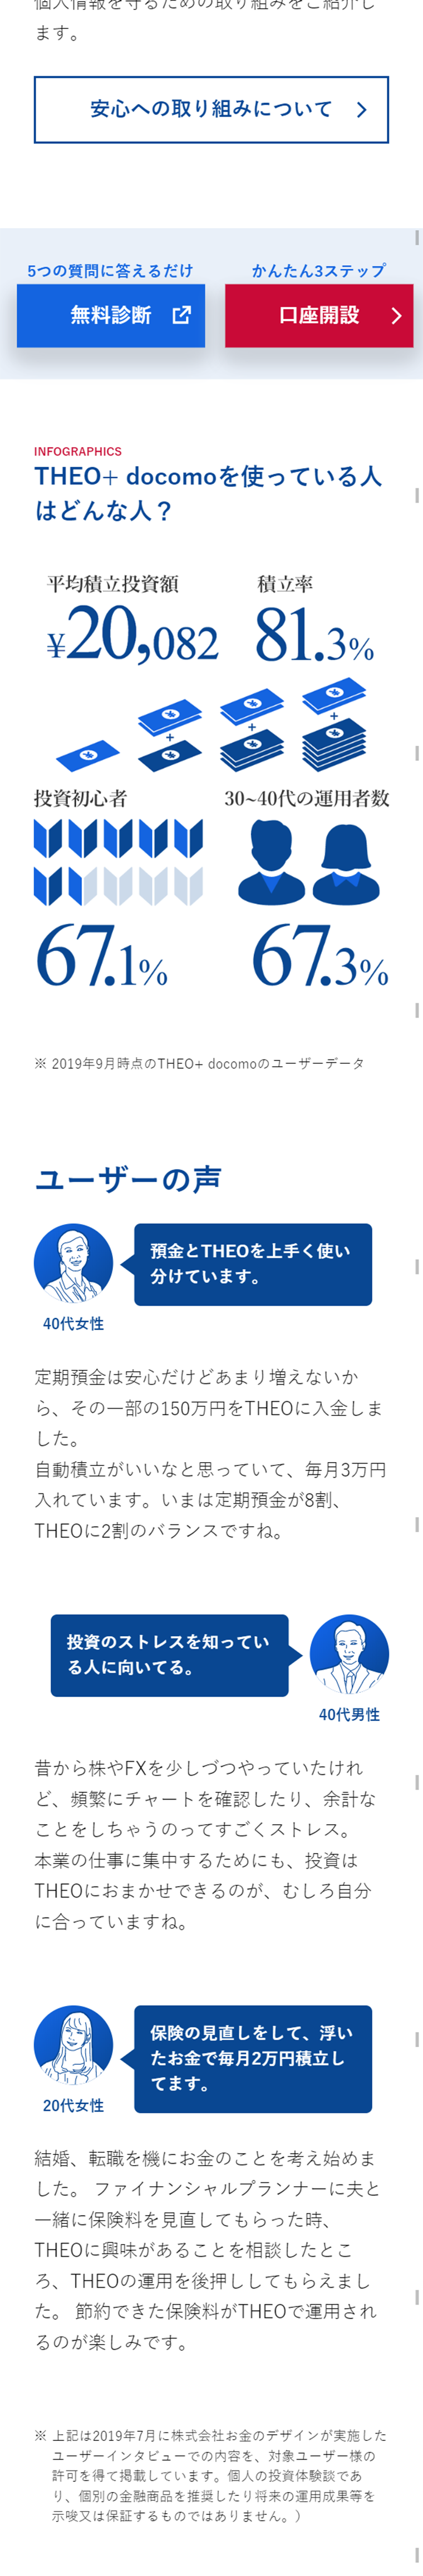 THEO[テオ]+ docomo_sp_2